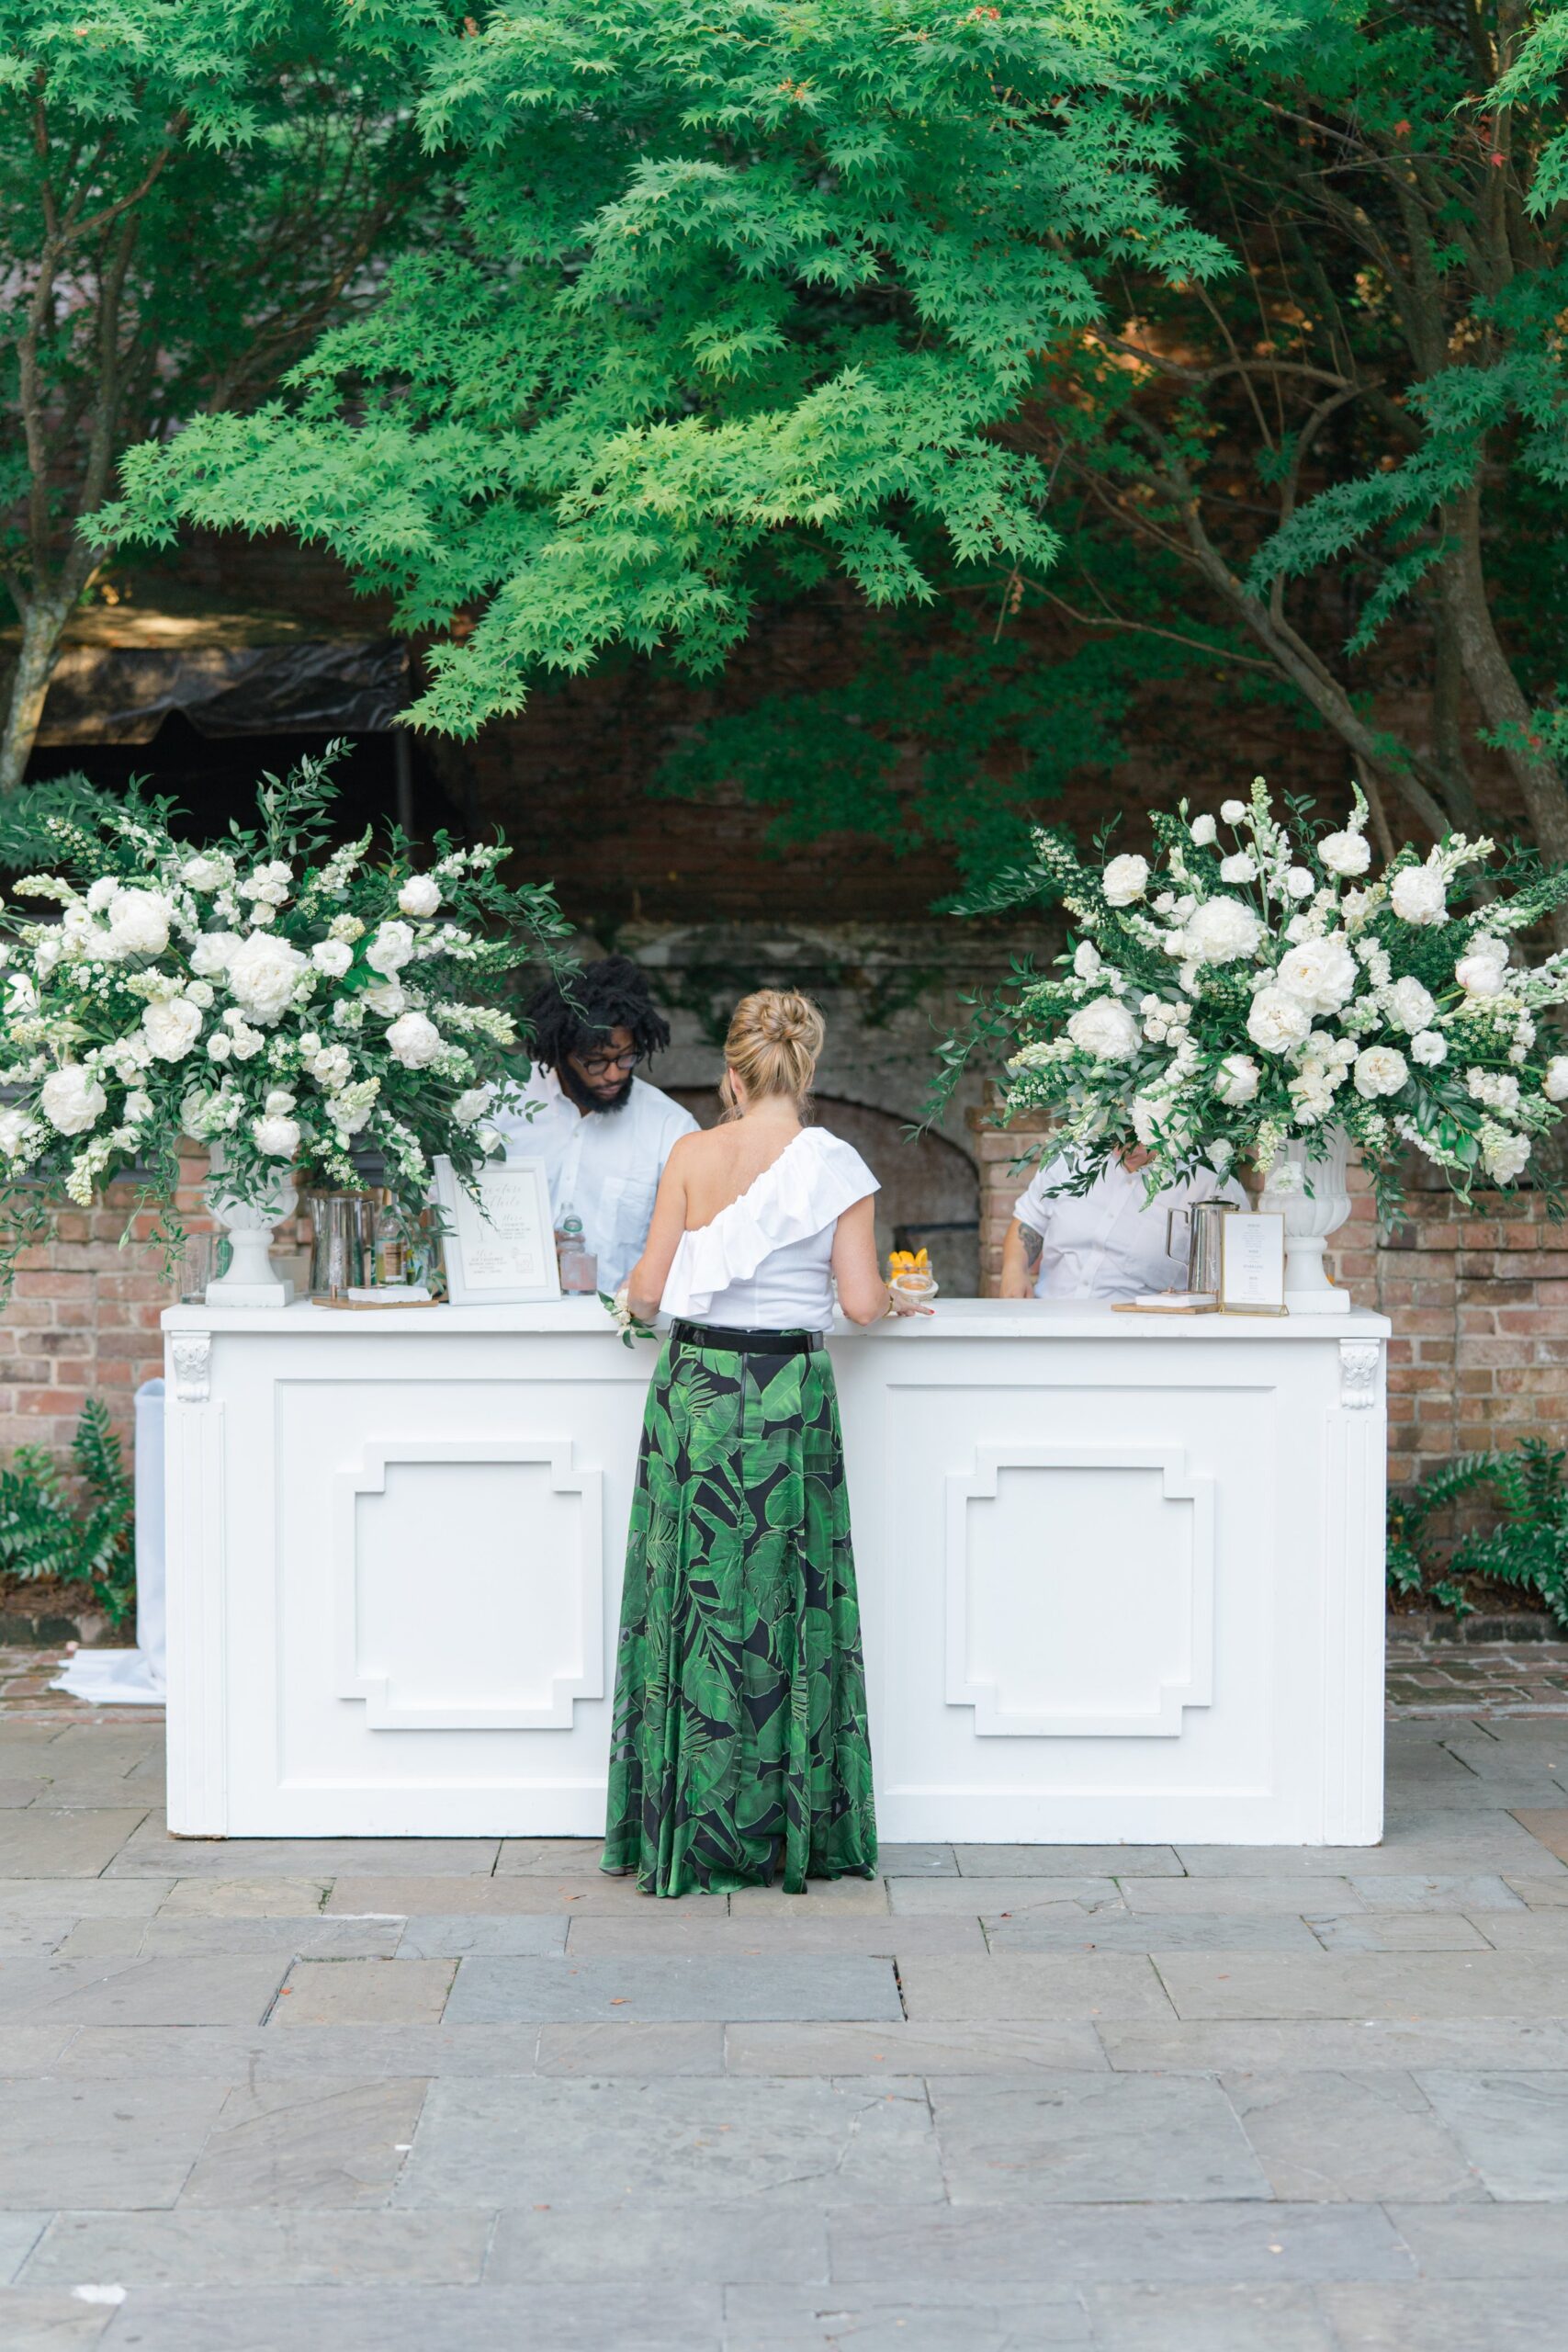 William Aiken House outdoor wedding reception bar with oversized flowers.